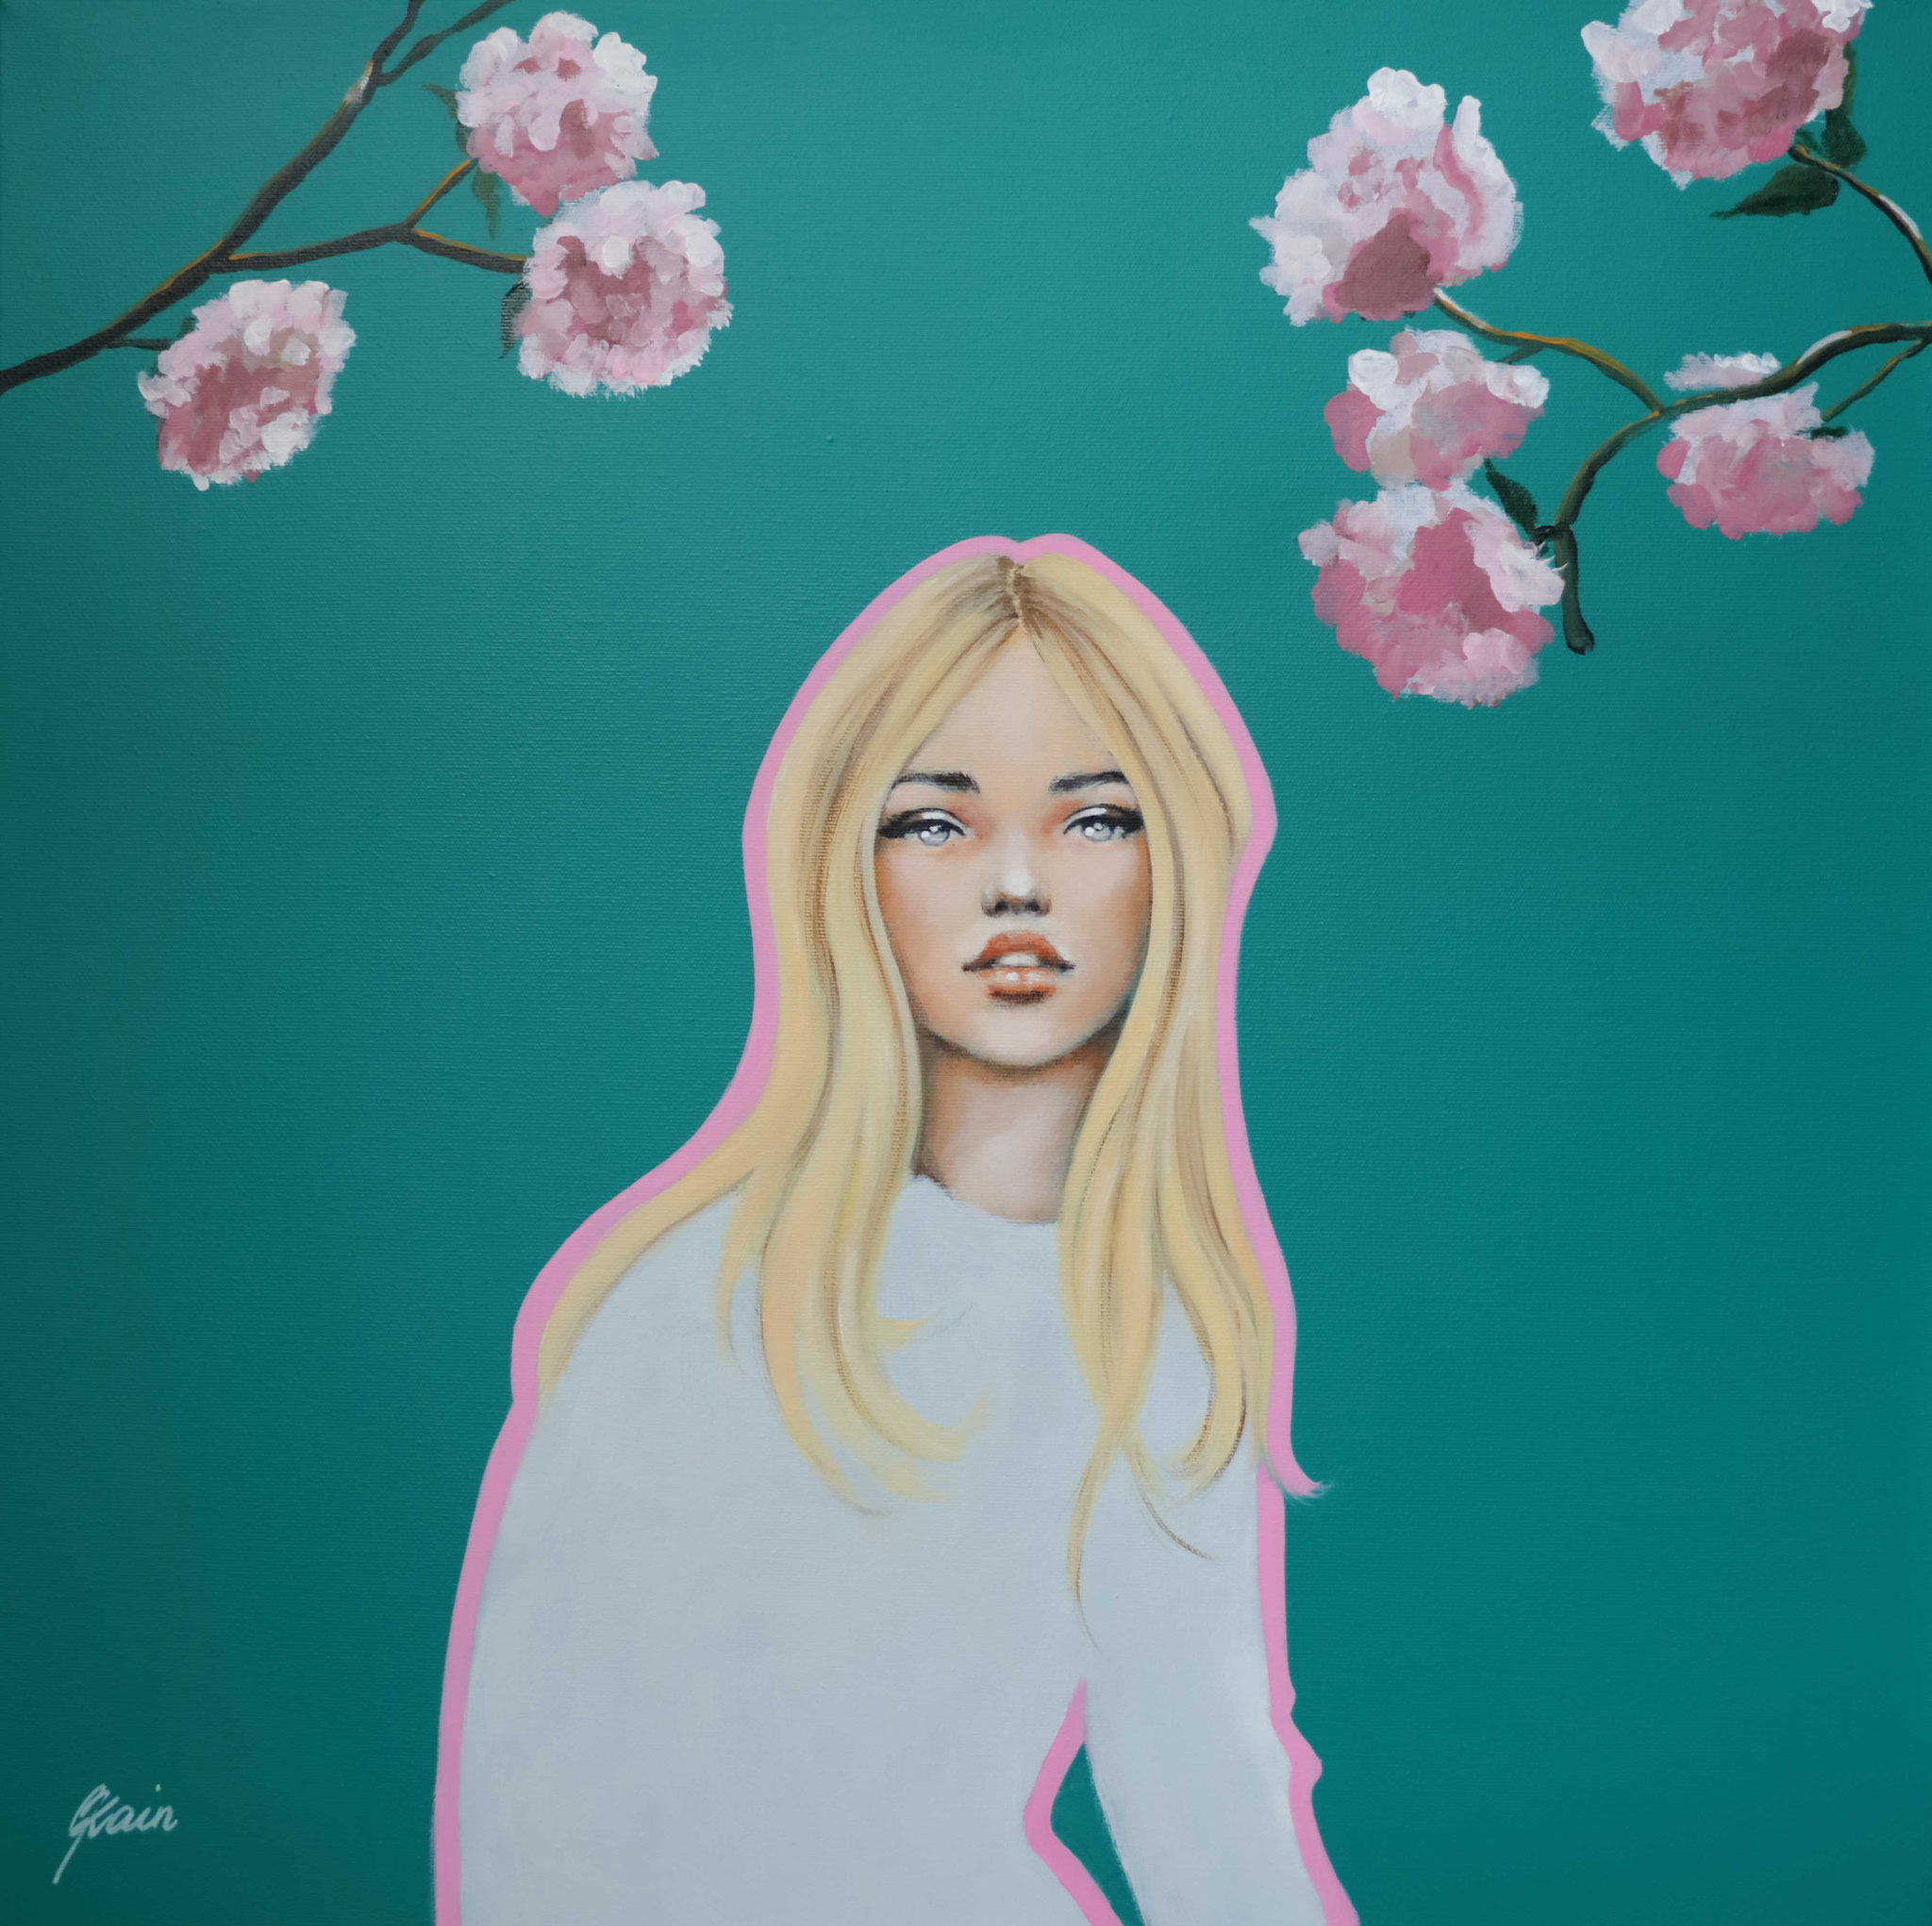 ROSIE, 70 x 70 cm, Acrylic on canvas